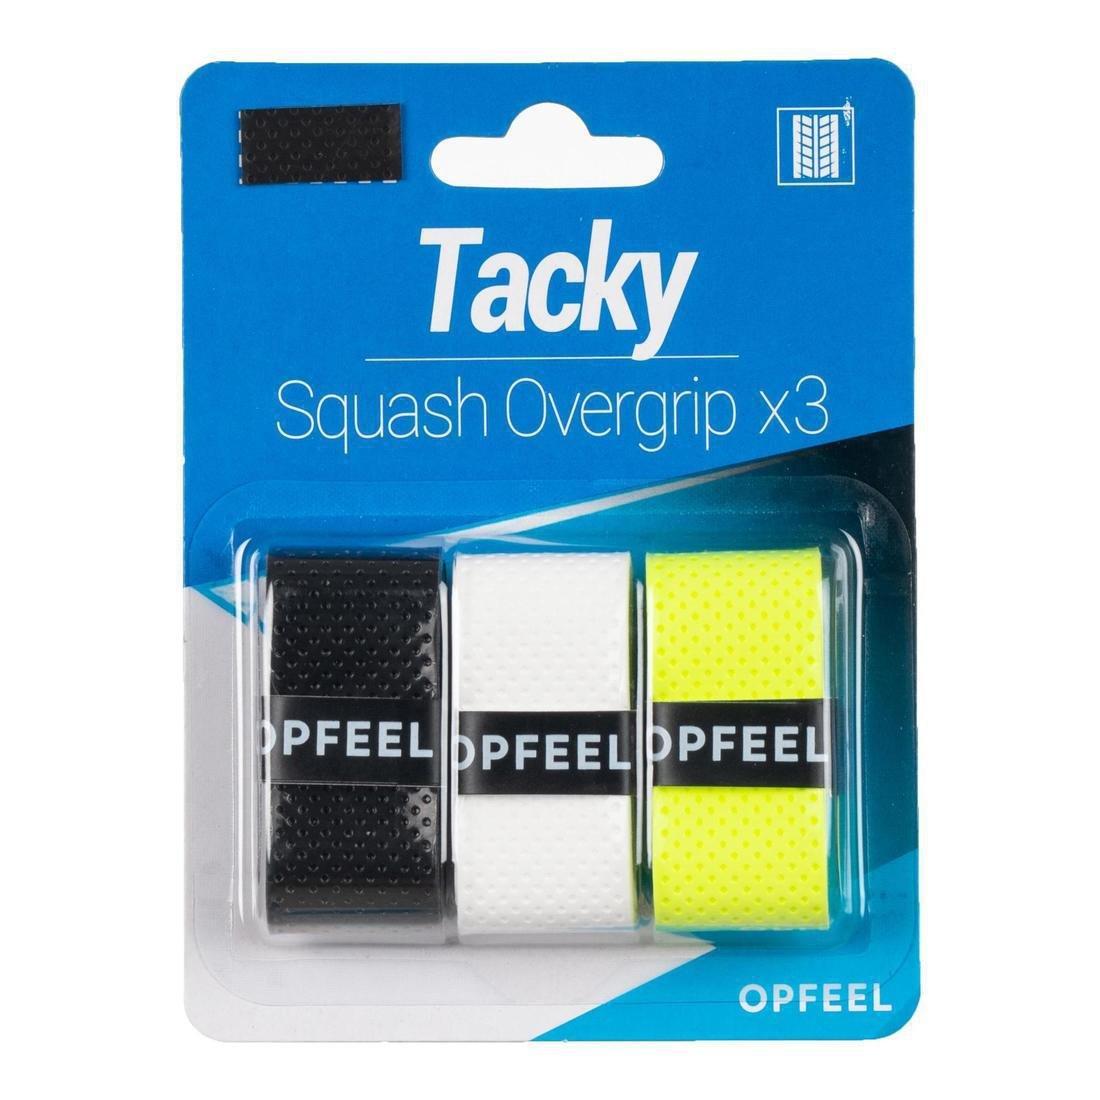 OPFEEL - Tacky Squash Overgrip, White/Black/Yellow